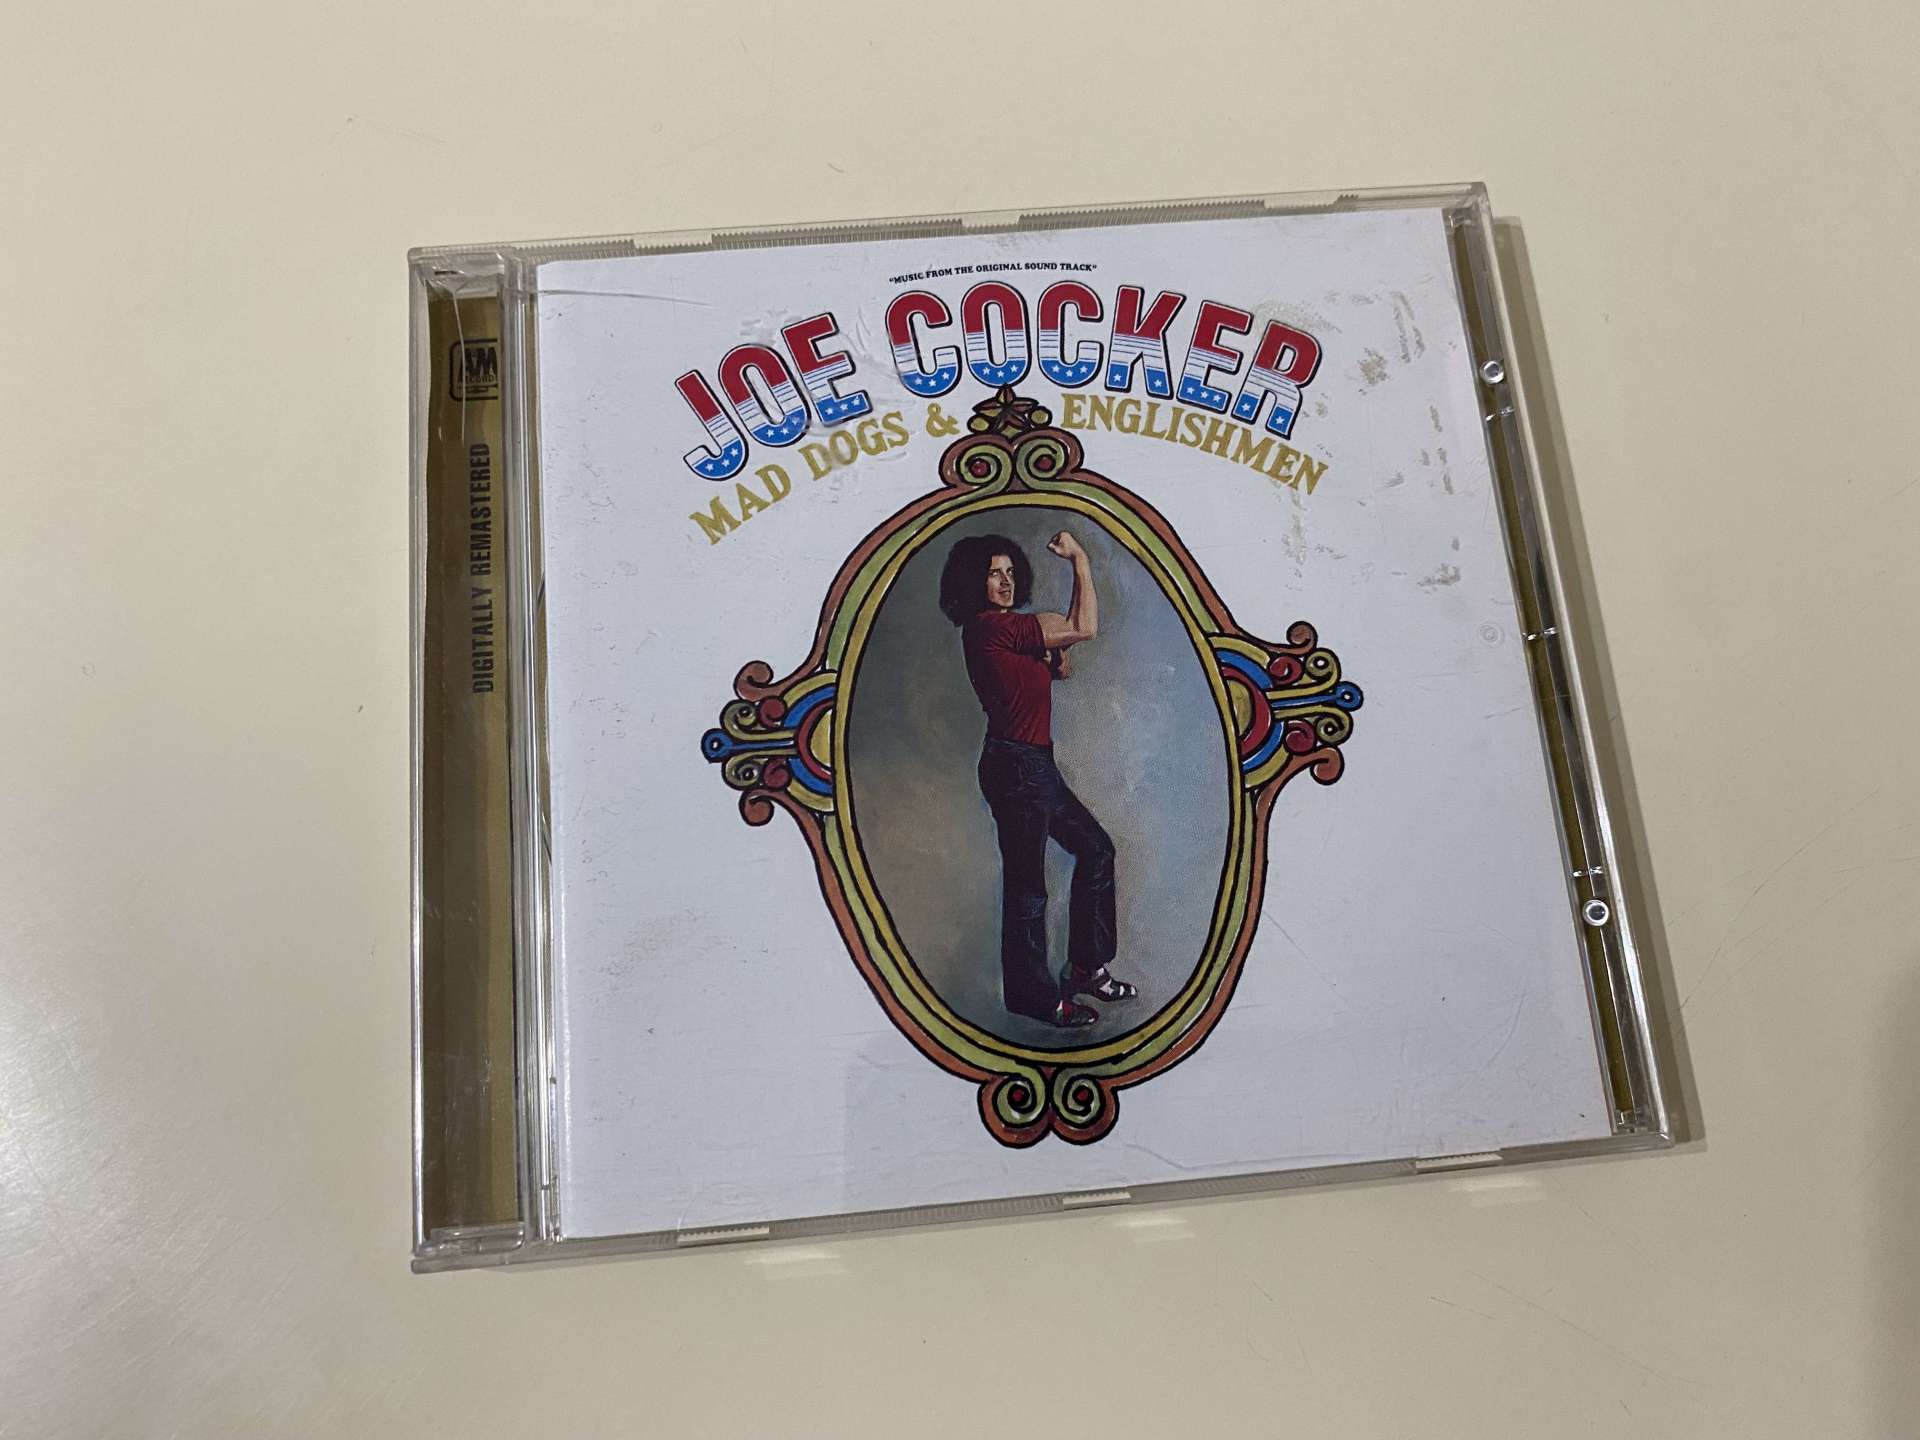 Joe Cocker – Mad Dogs & Englishmen